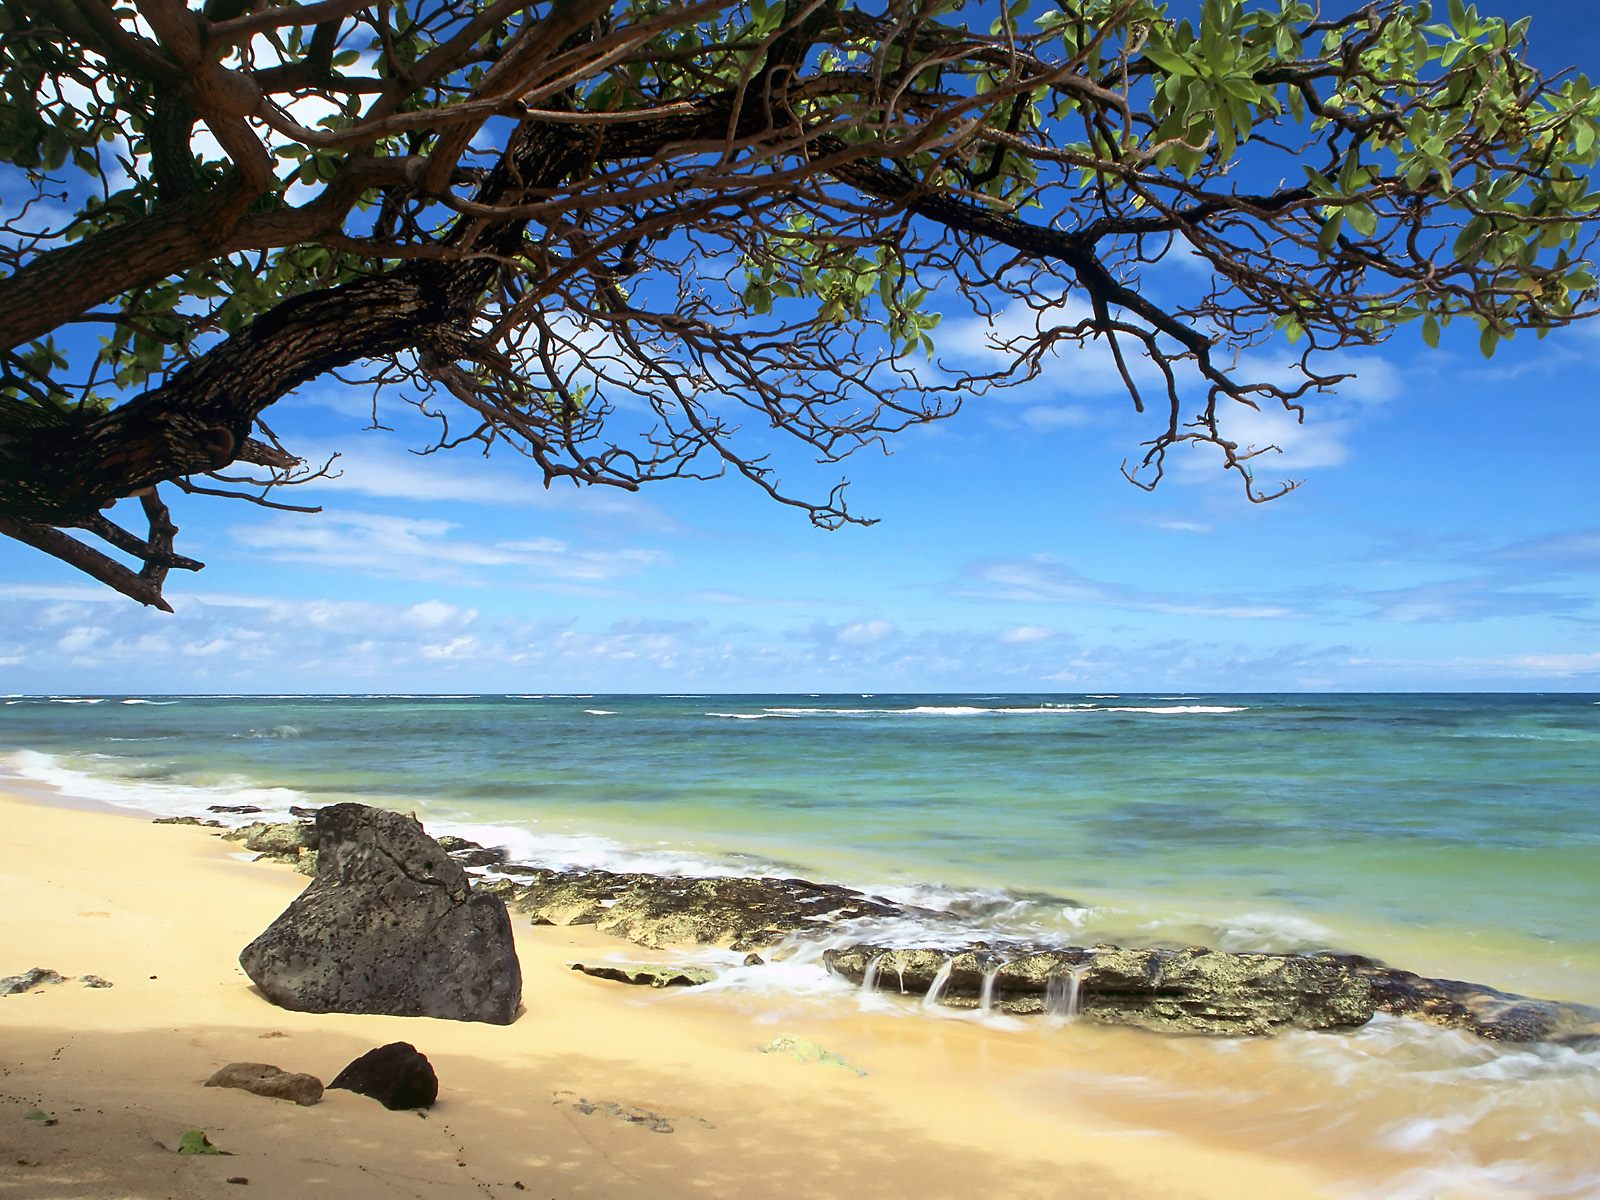 uk kanenelu beach oahu hawaii nature wallpaper image featuring beaches